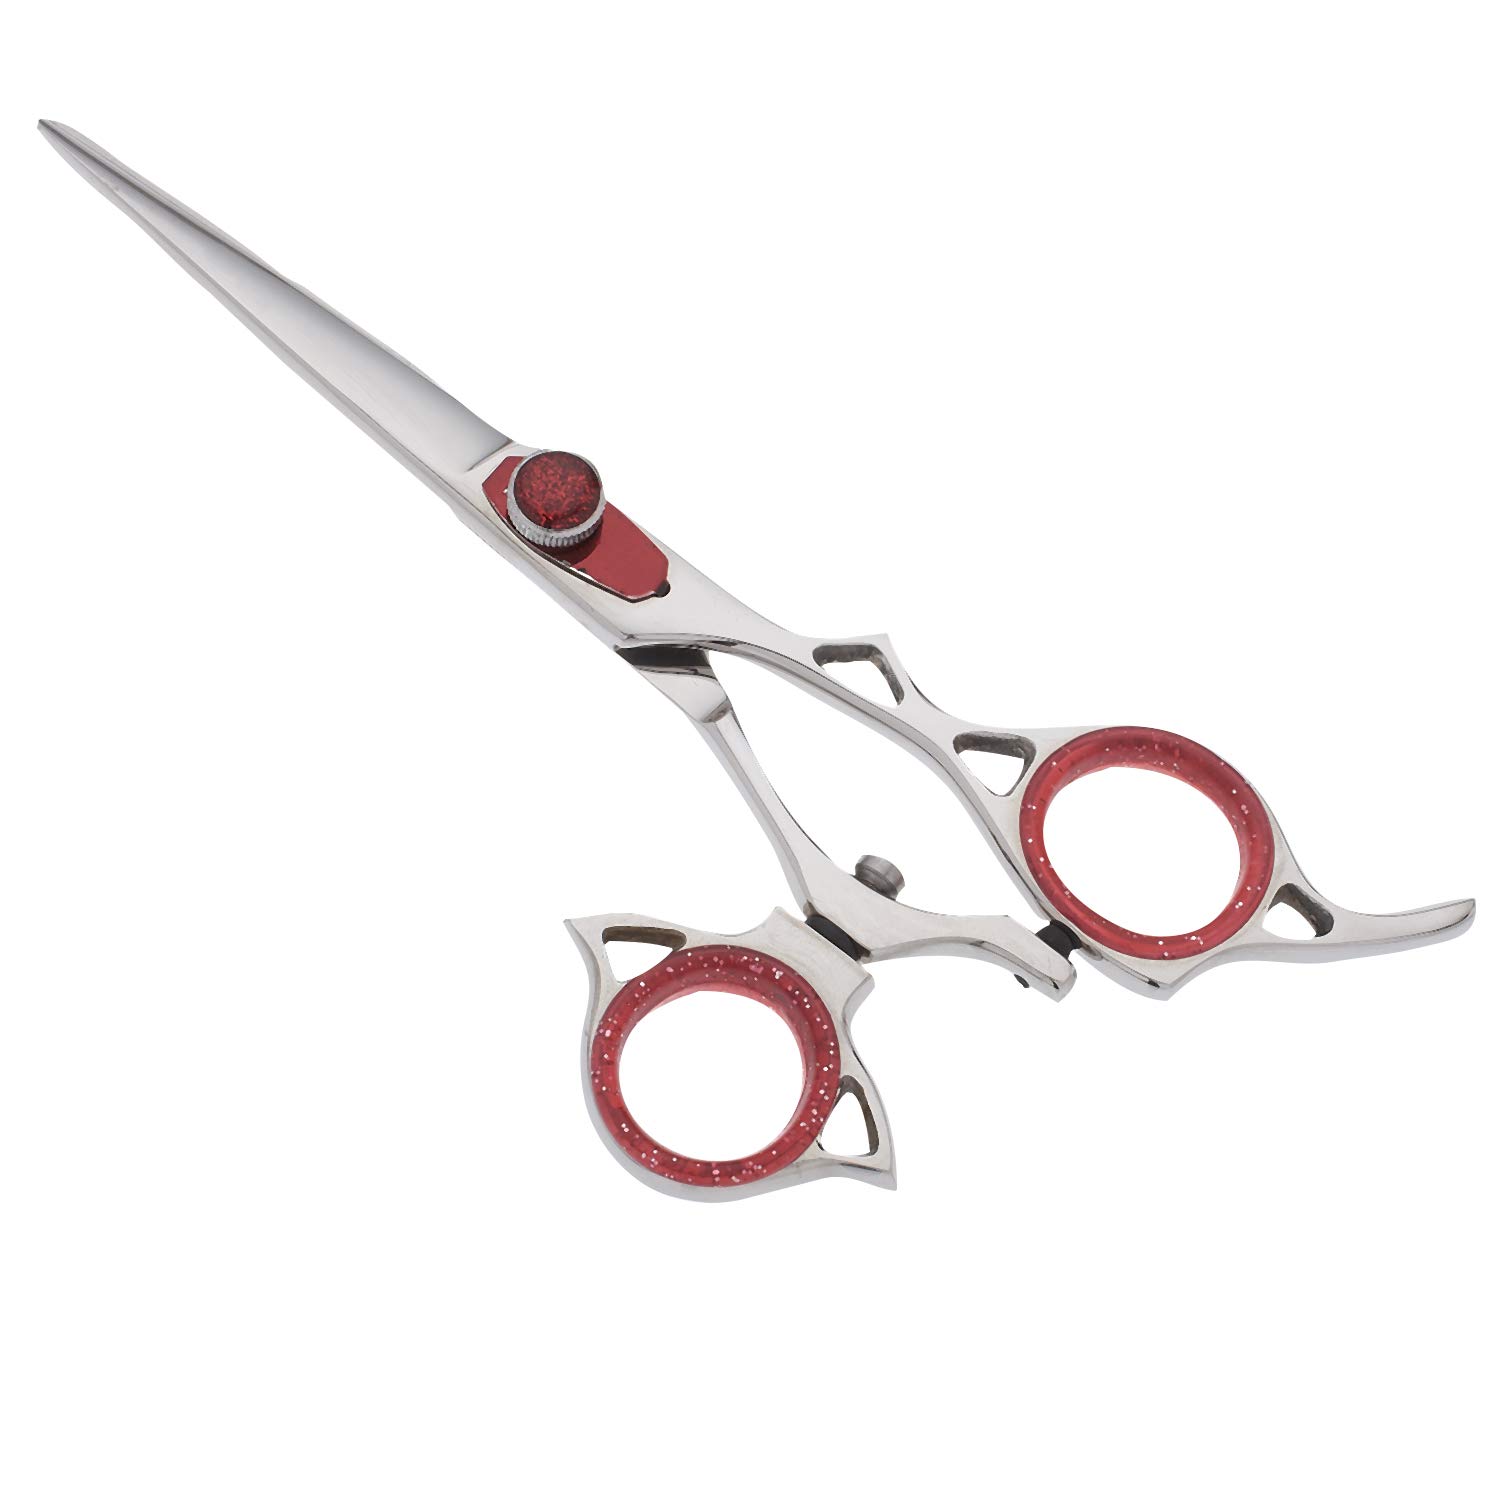 Professional Hair Cutting Scissors Set, Razor Edge Thinning Texturizing Shears for Barber Hairdressing Salon Adjustable Finger Ring + Zipper Case, Stainless Steel